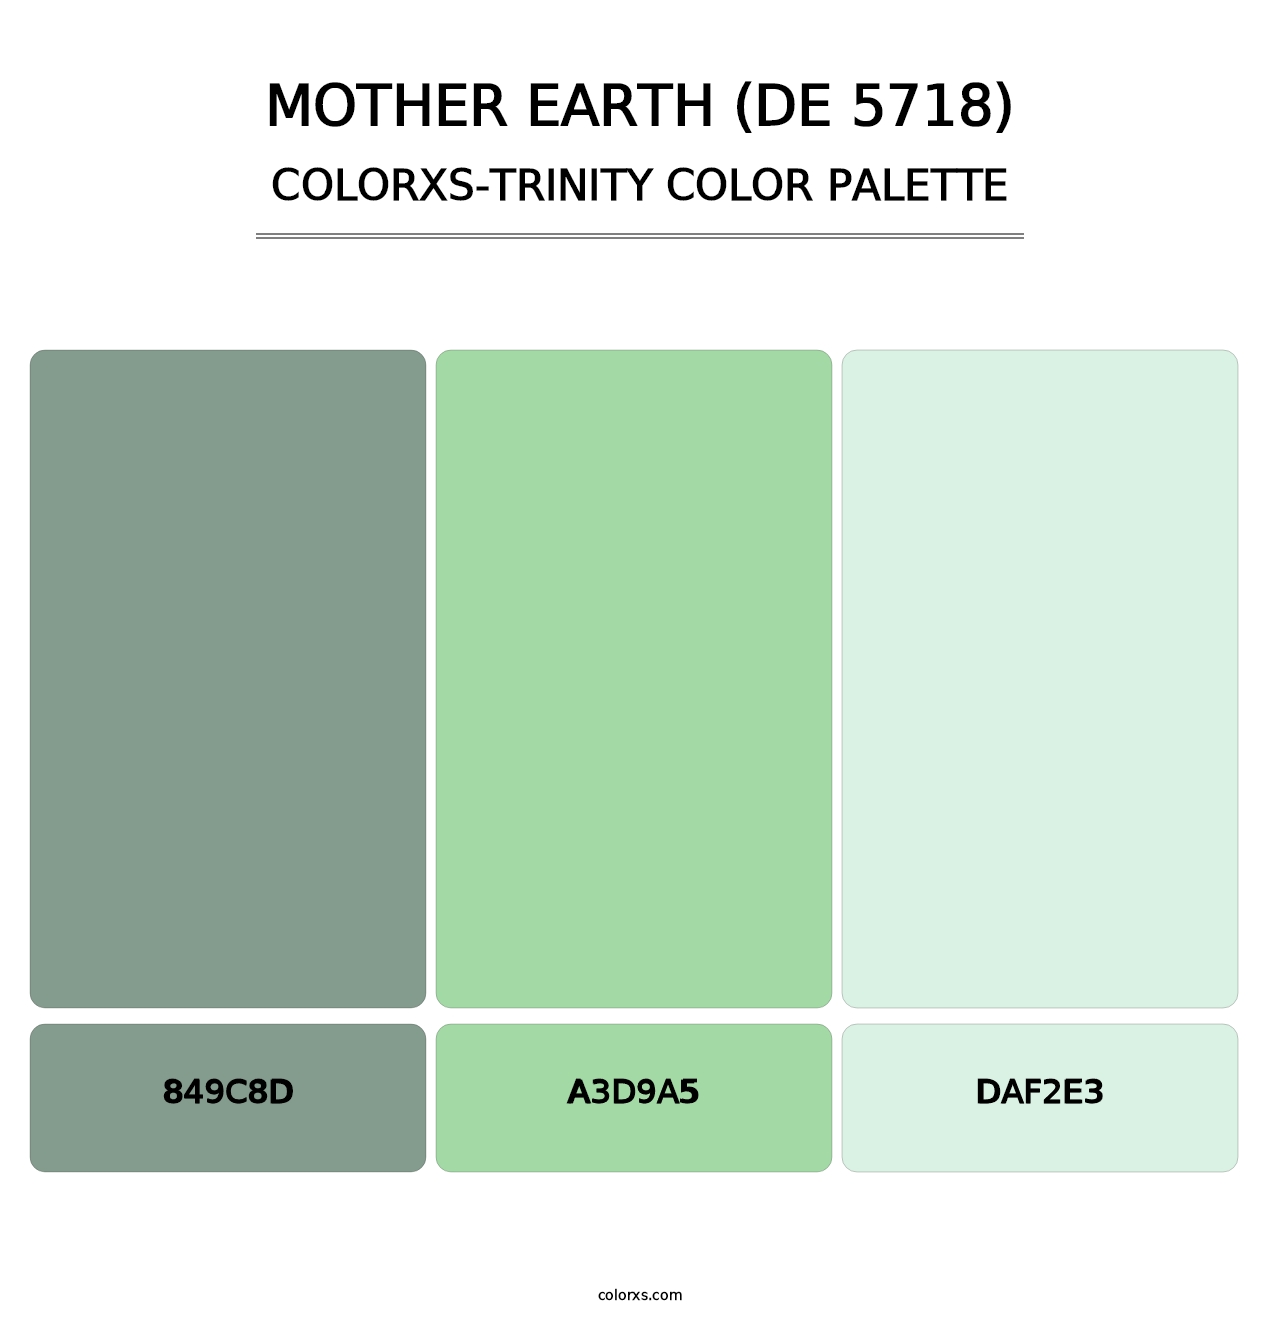 Mother Earth (DE 5718) - Colorxs Trinity Palette